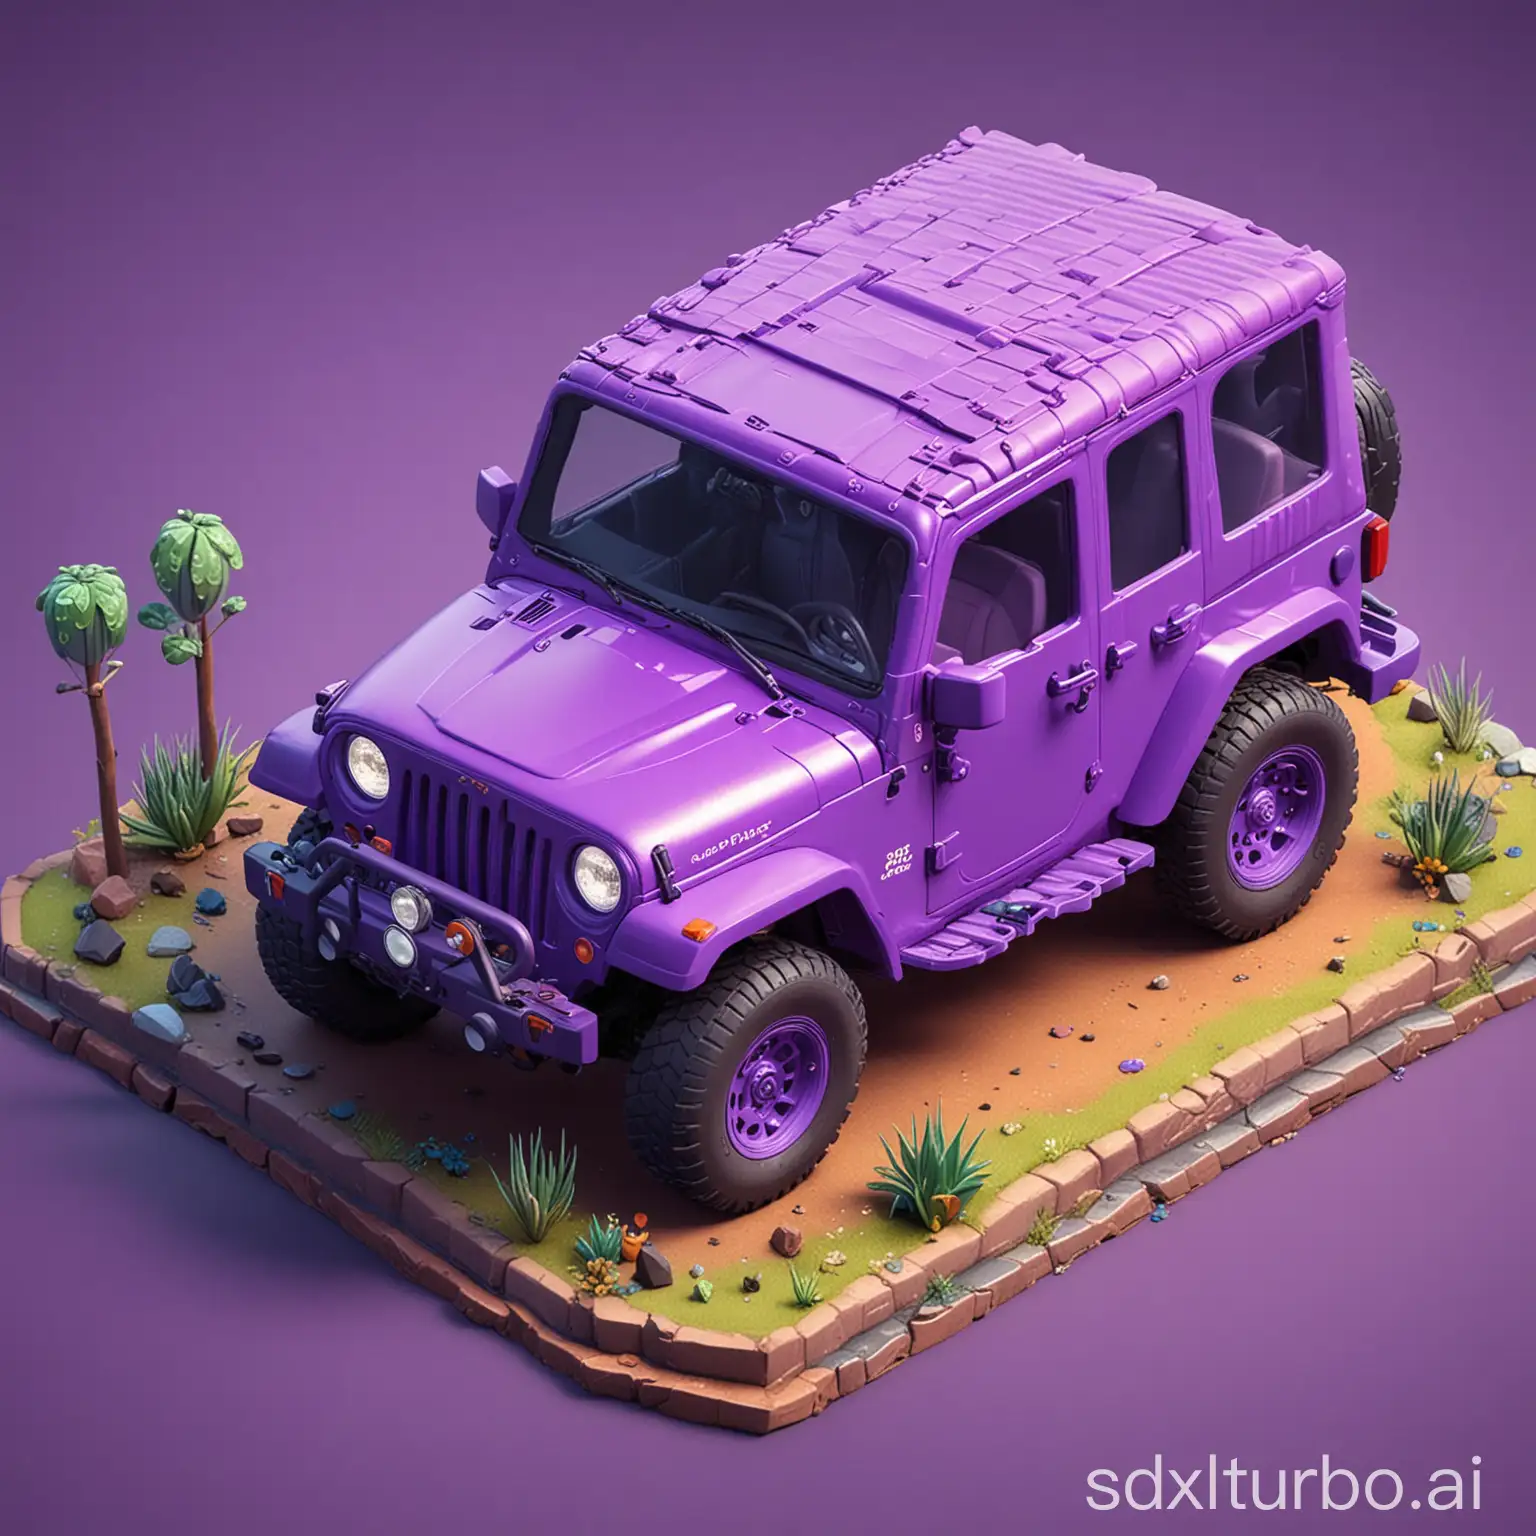 3d Pixar isometric beautiful purple jeep with someone inside